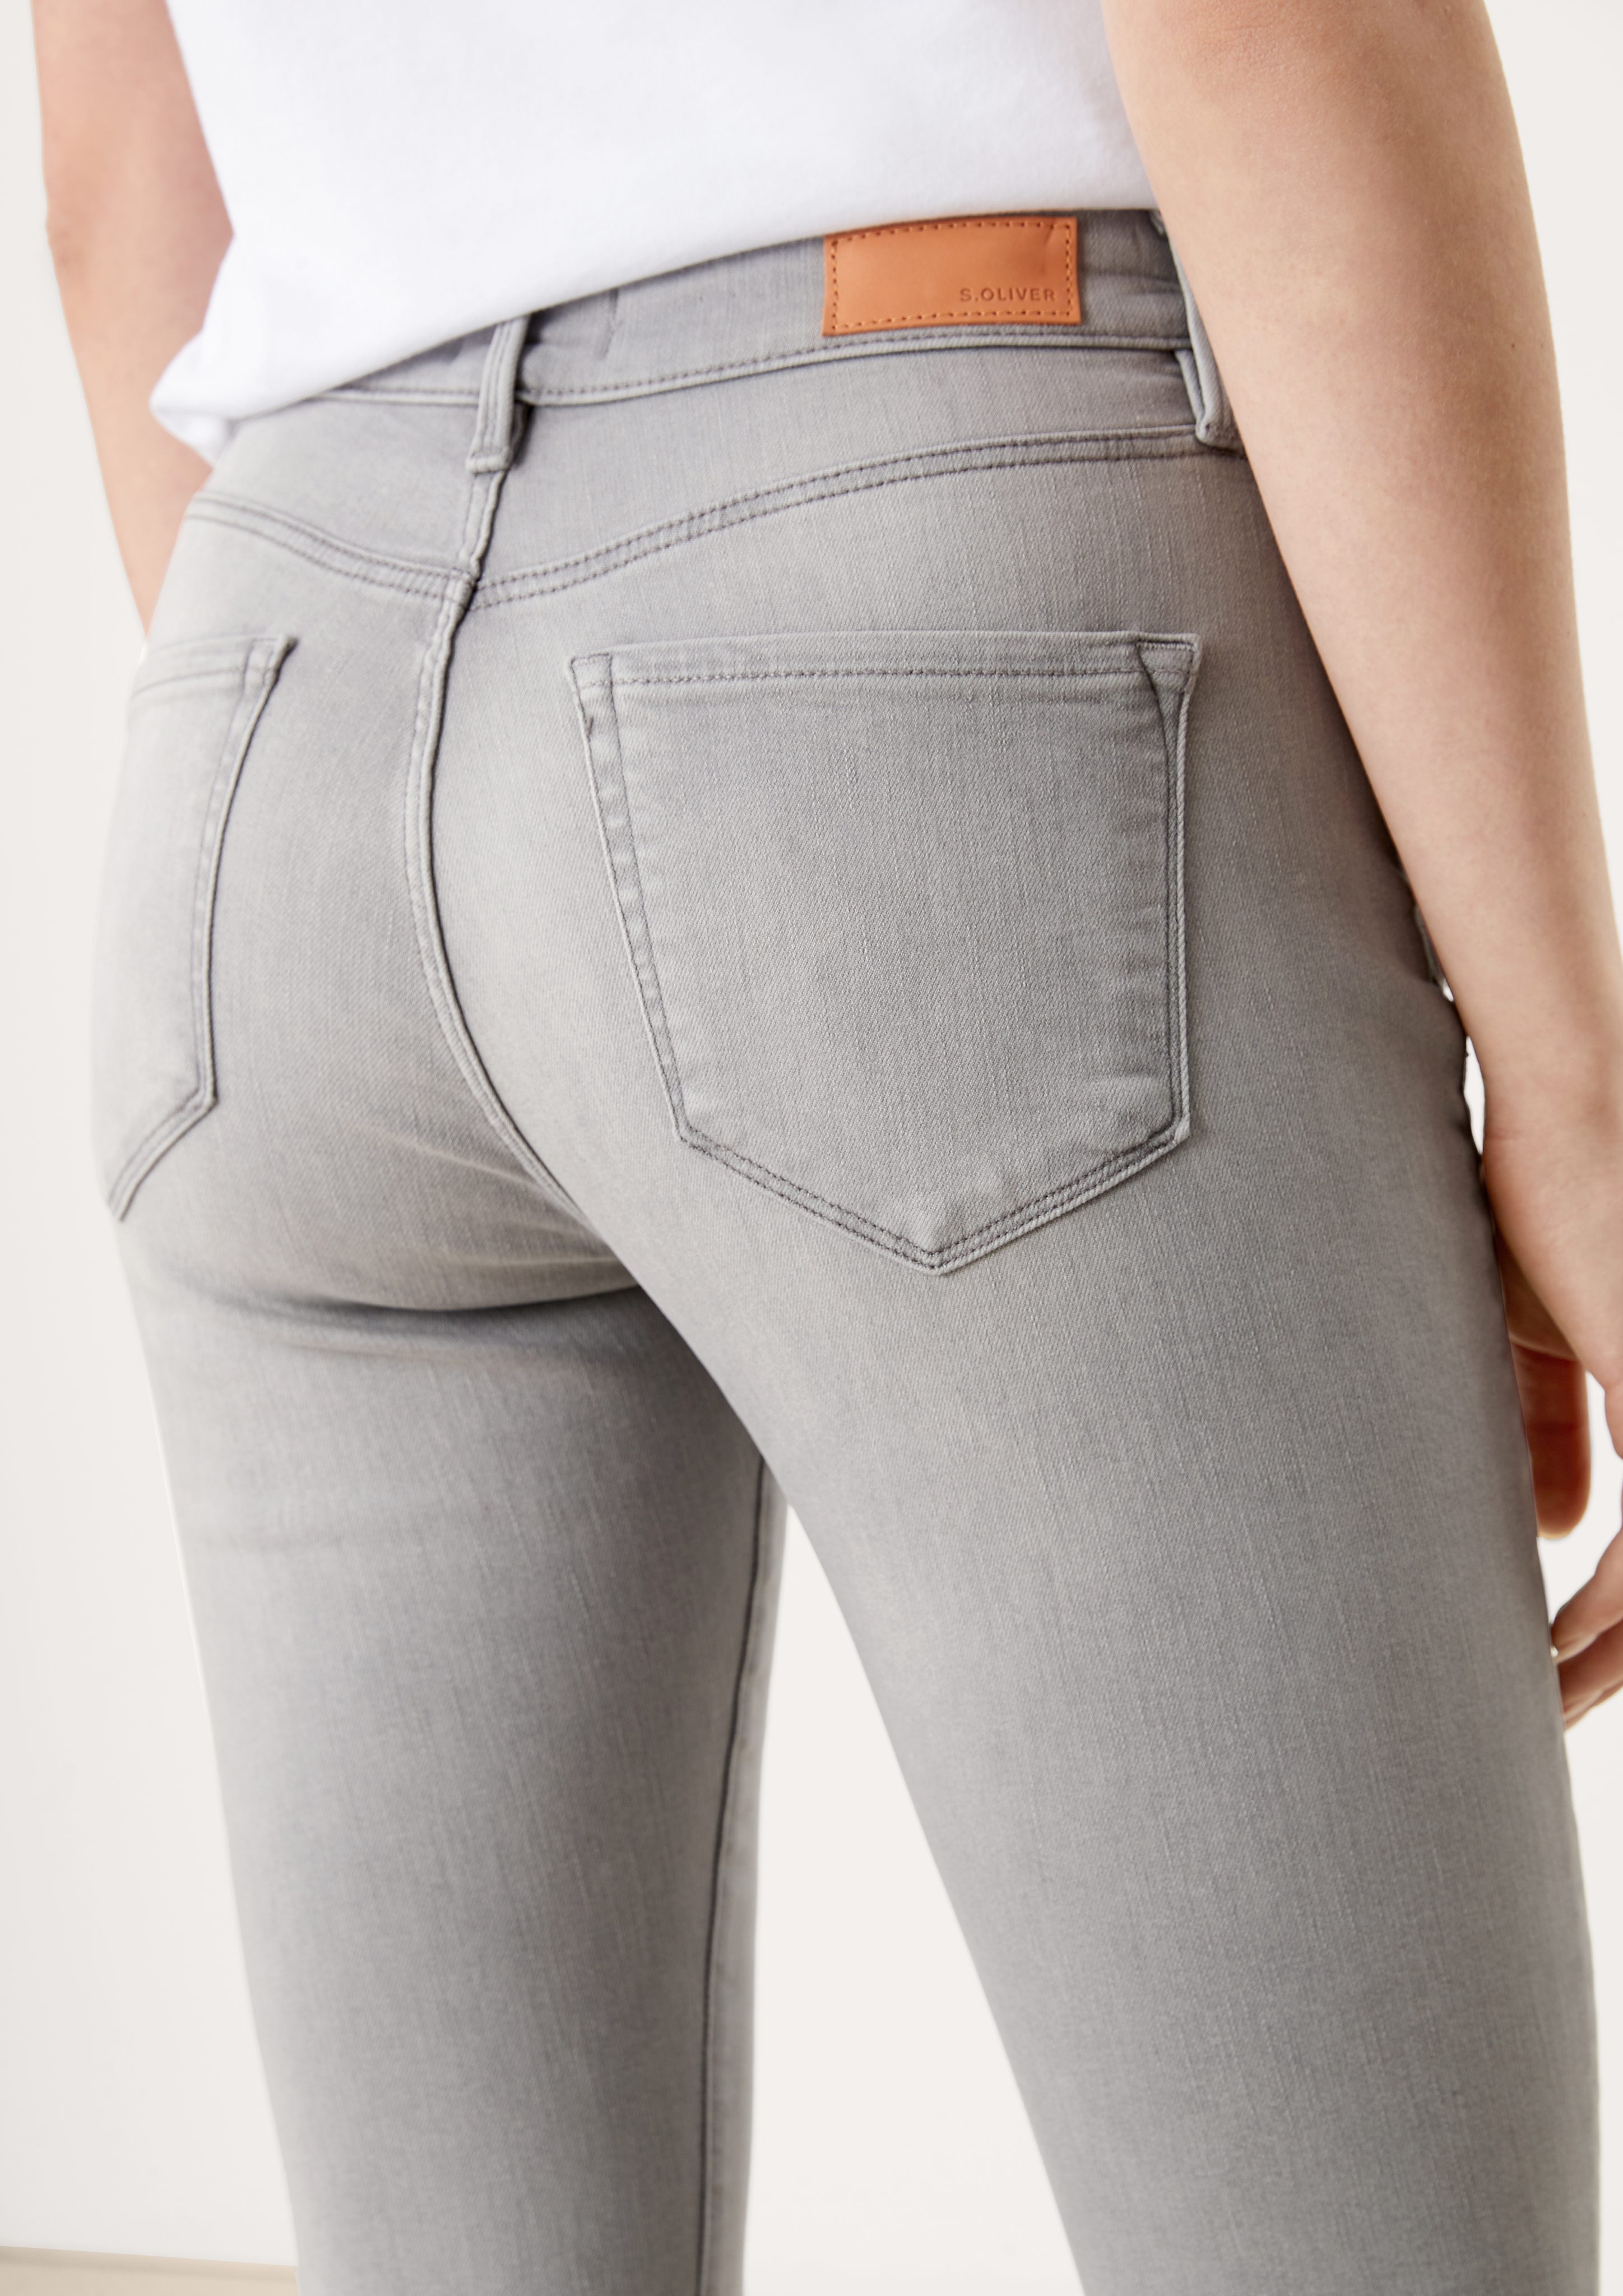 Mid 5-Pocket-Jeans s.Oliver grey Fit Leg Izabell Jeans / light Skinny Skinny / / Rise